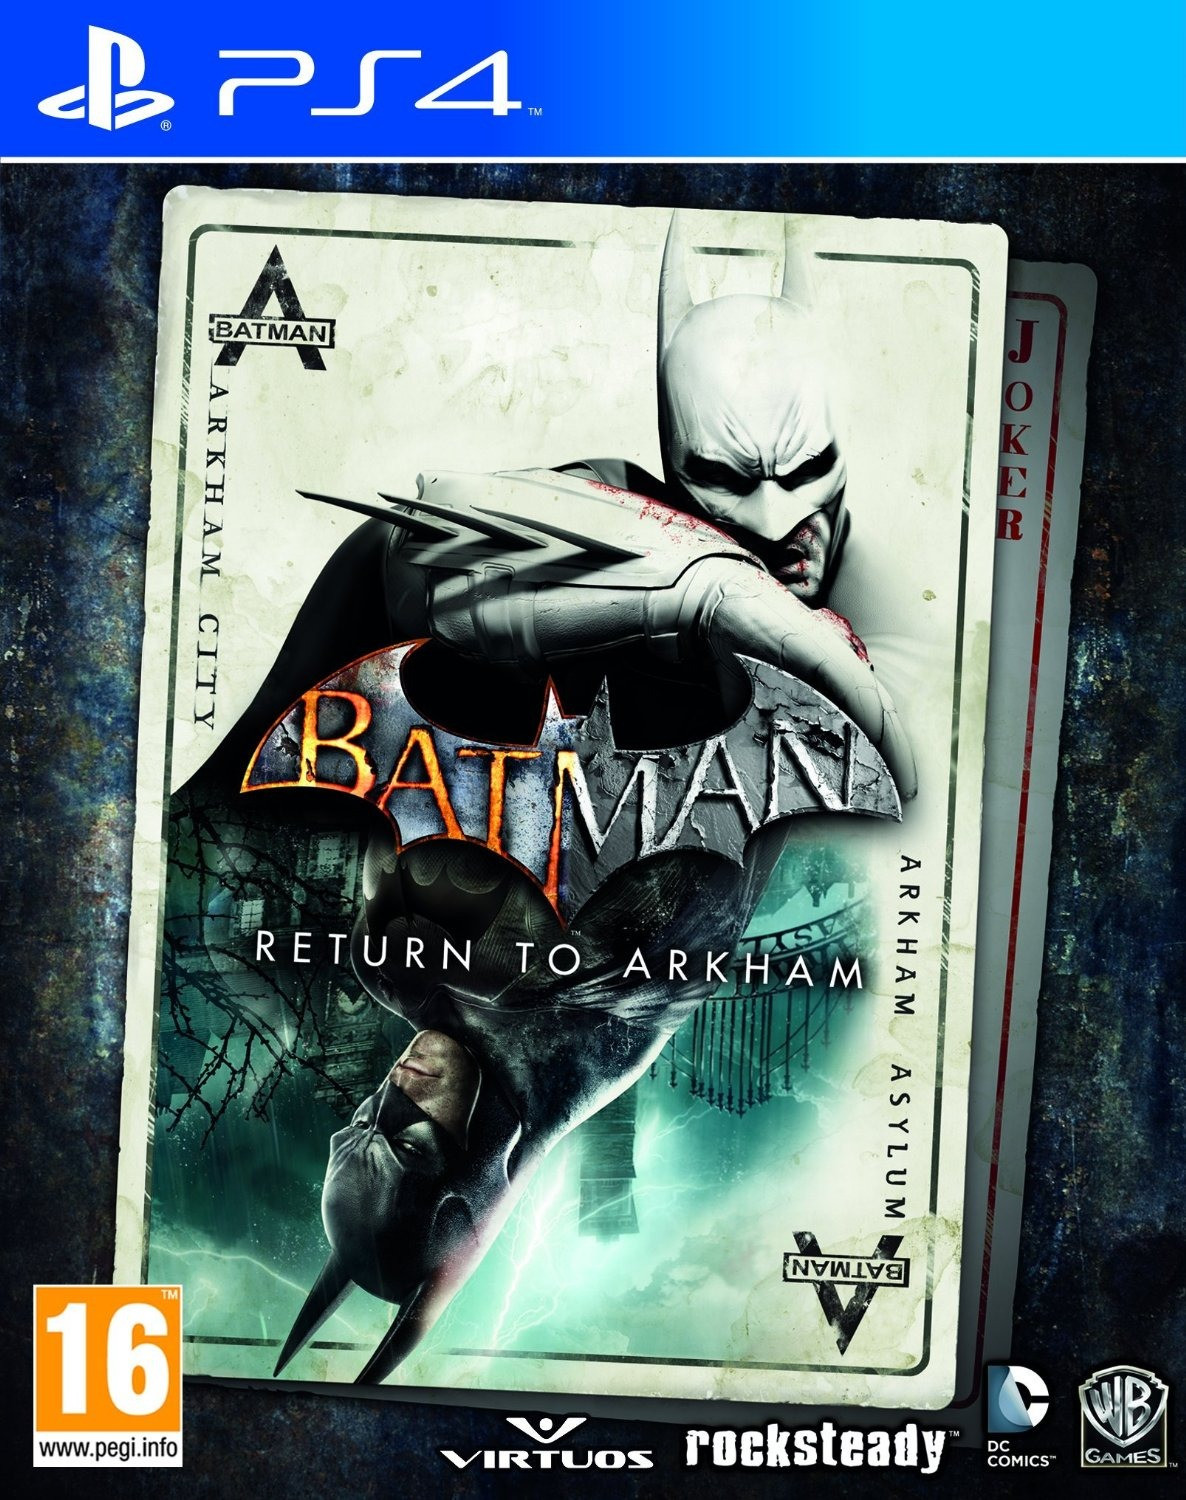 Photos - Game Warner Bros Batman: Return to Arkham (PS4)